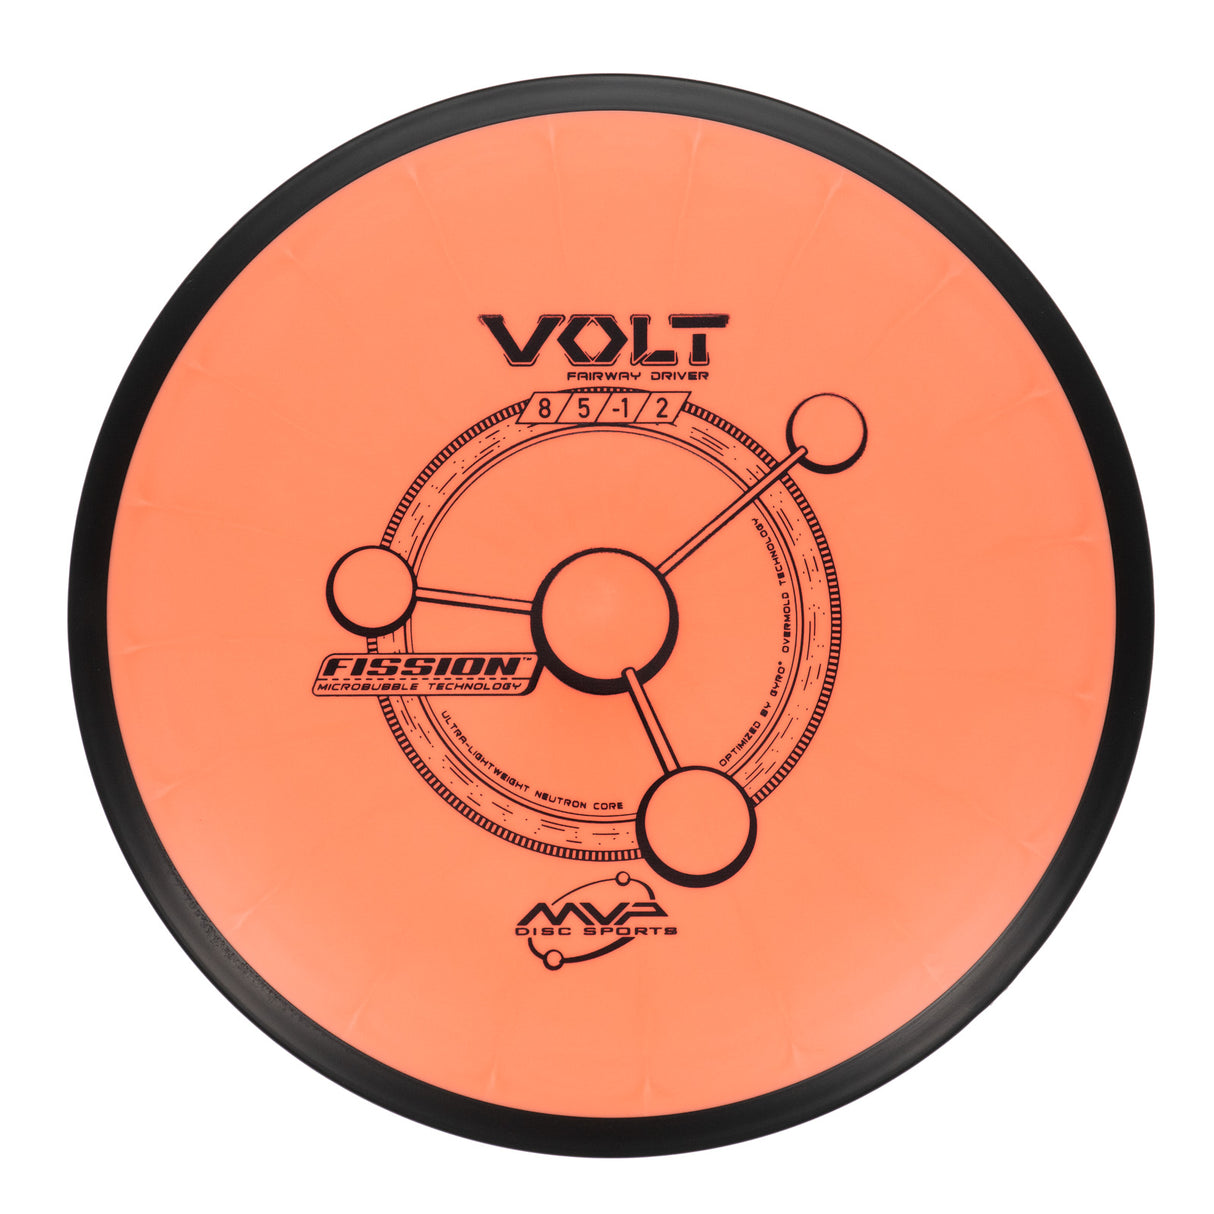 MVP Volt - Fission 161g | Style 0003